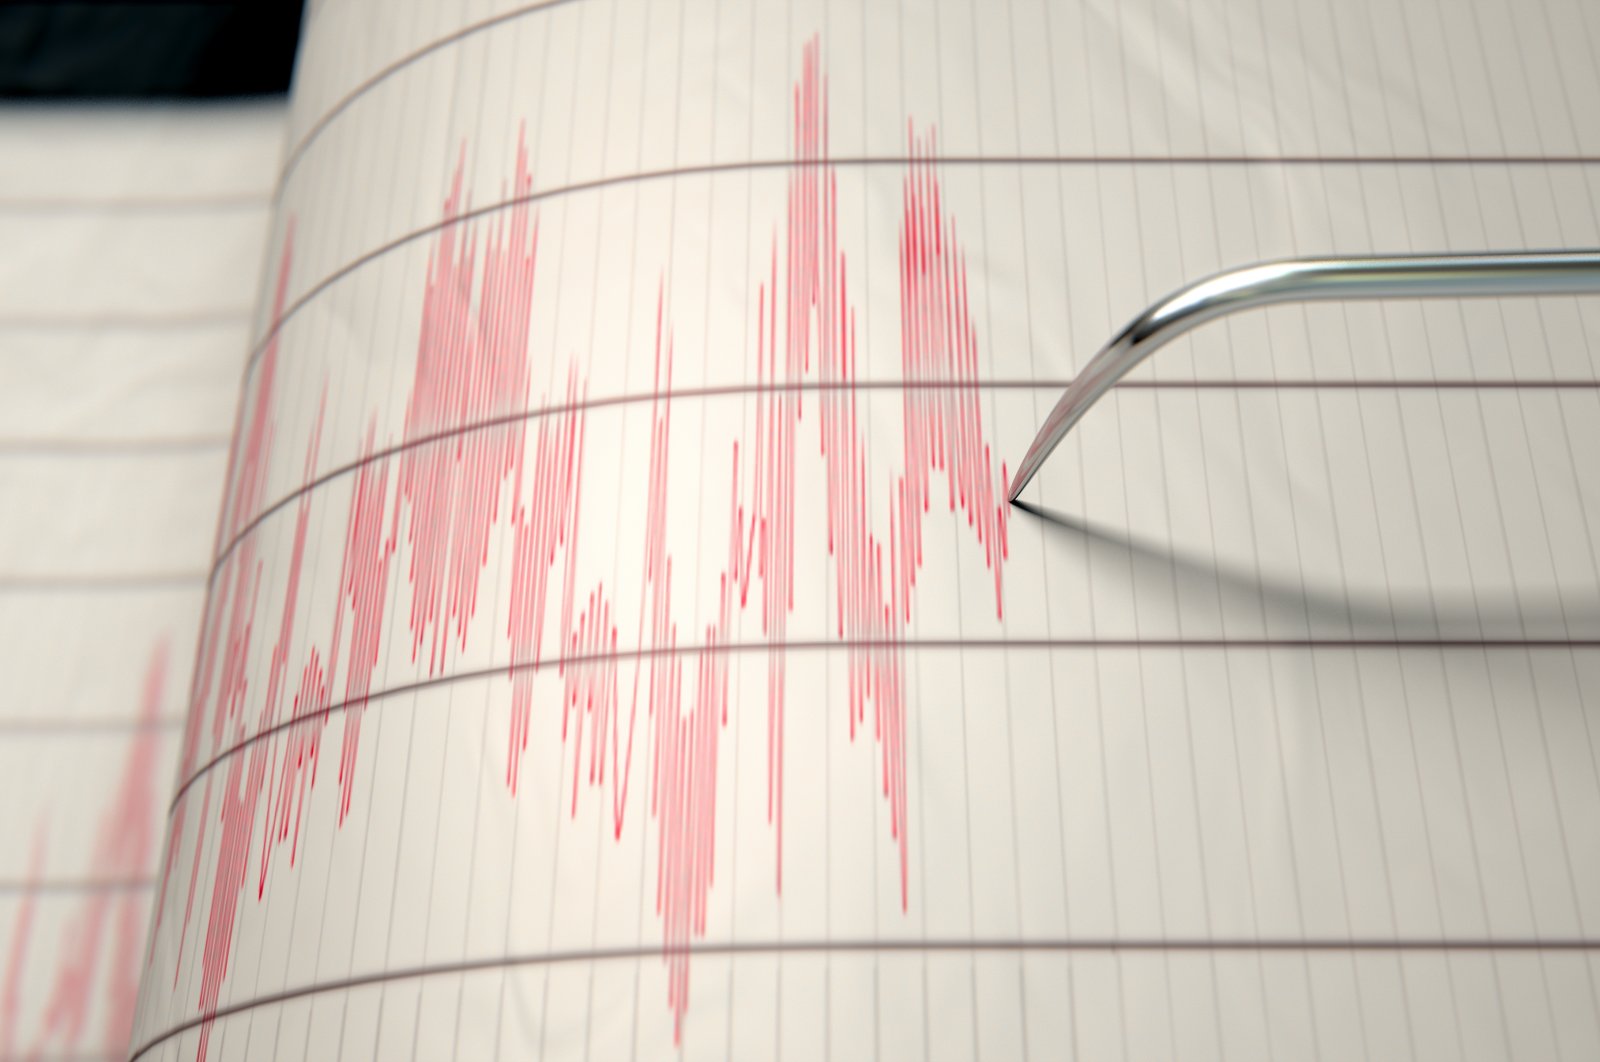 5.3 magnitude earthquake jolts Türkiye's Adıyaman